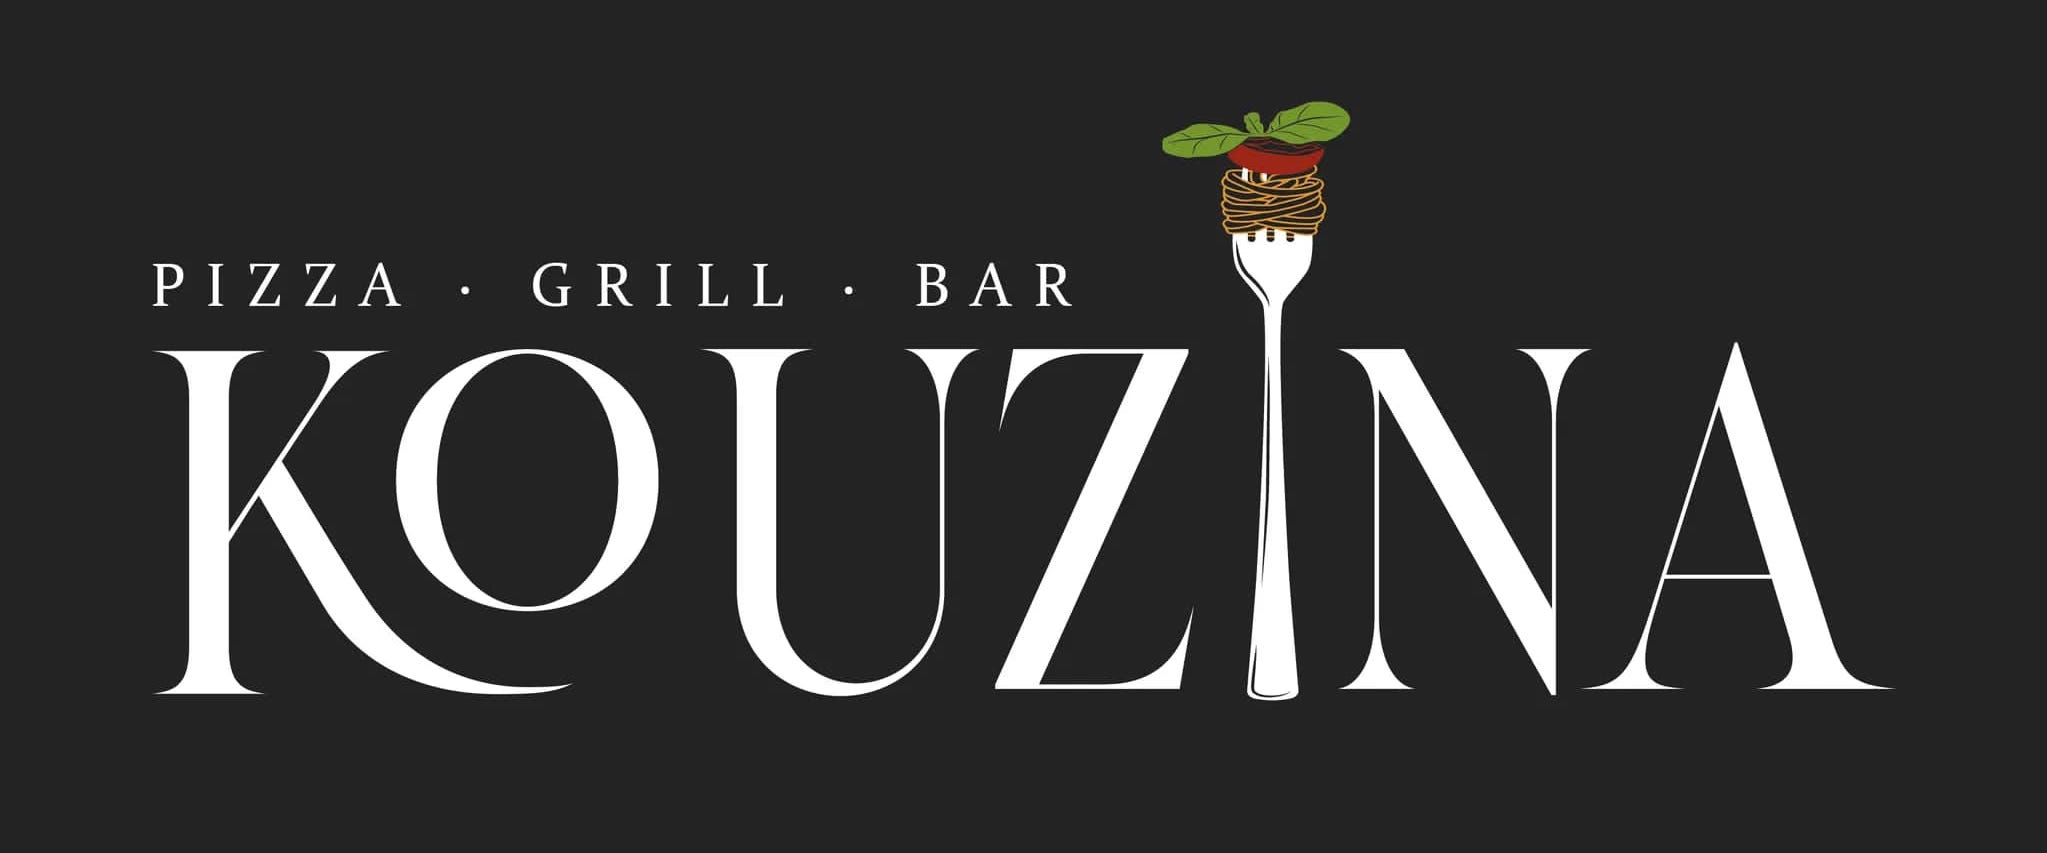 neues Restaurant Logo, Kouzina Schriftzug